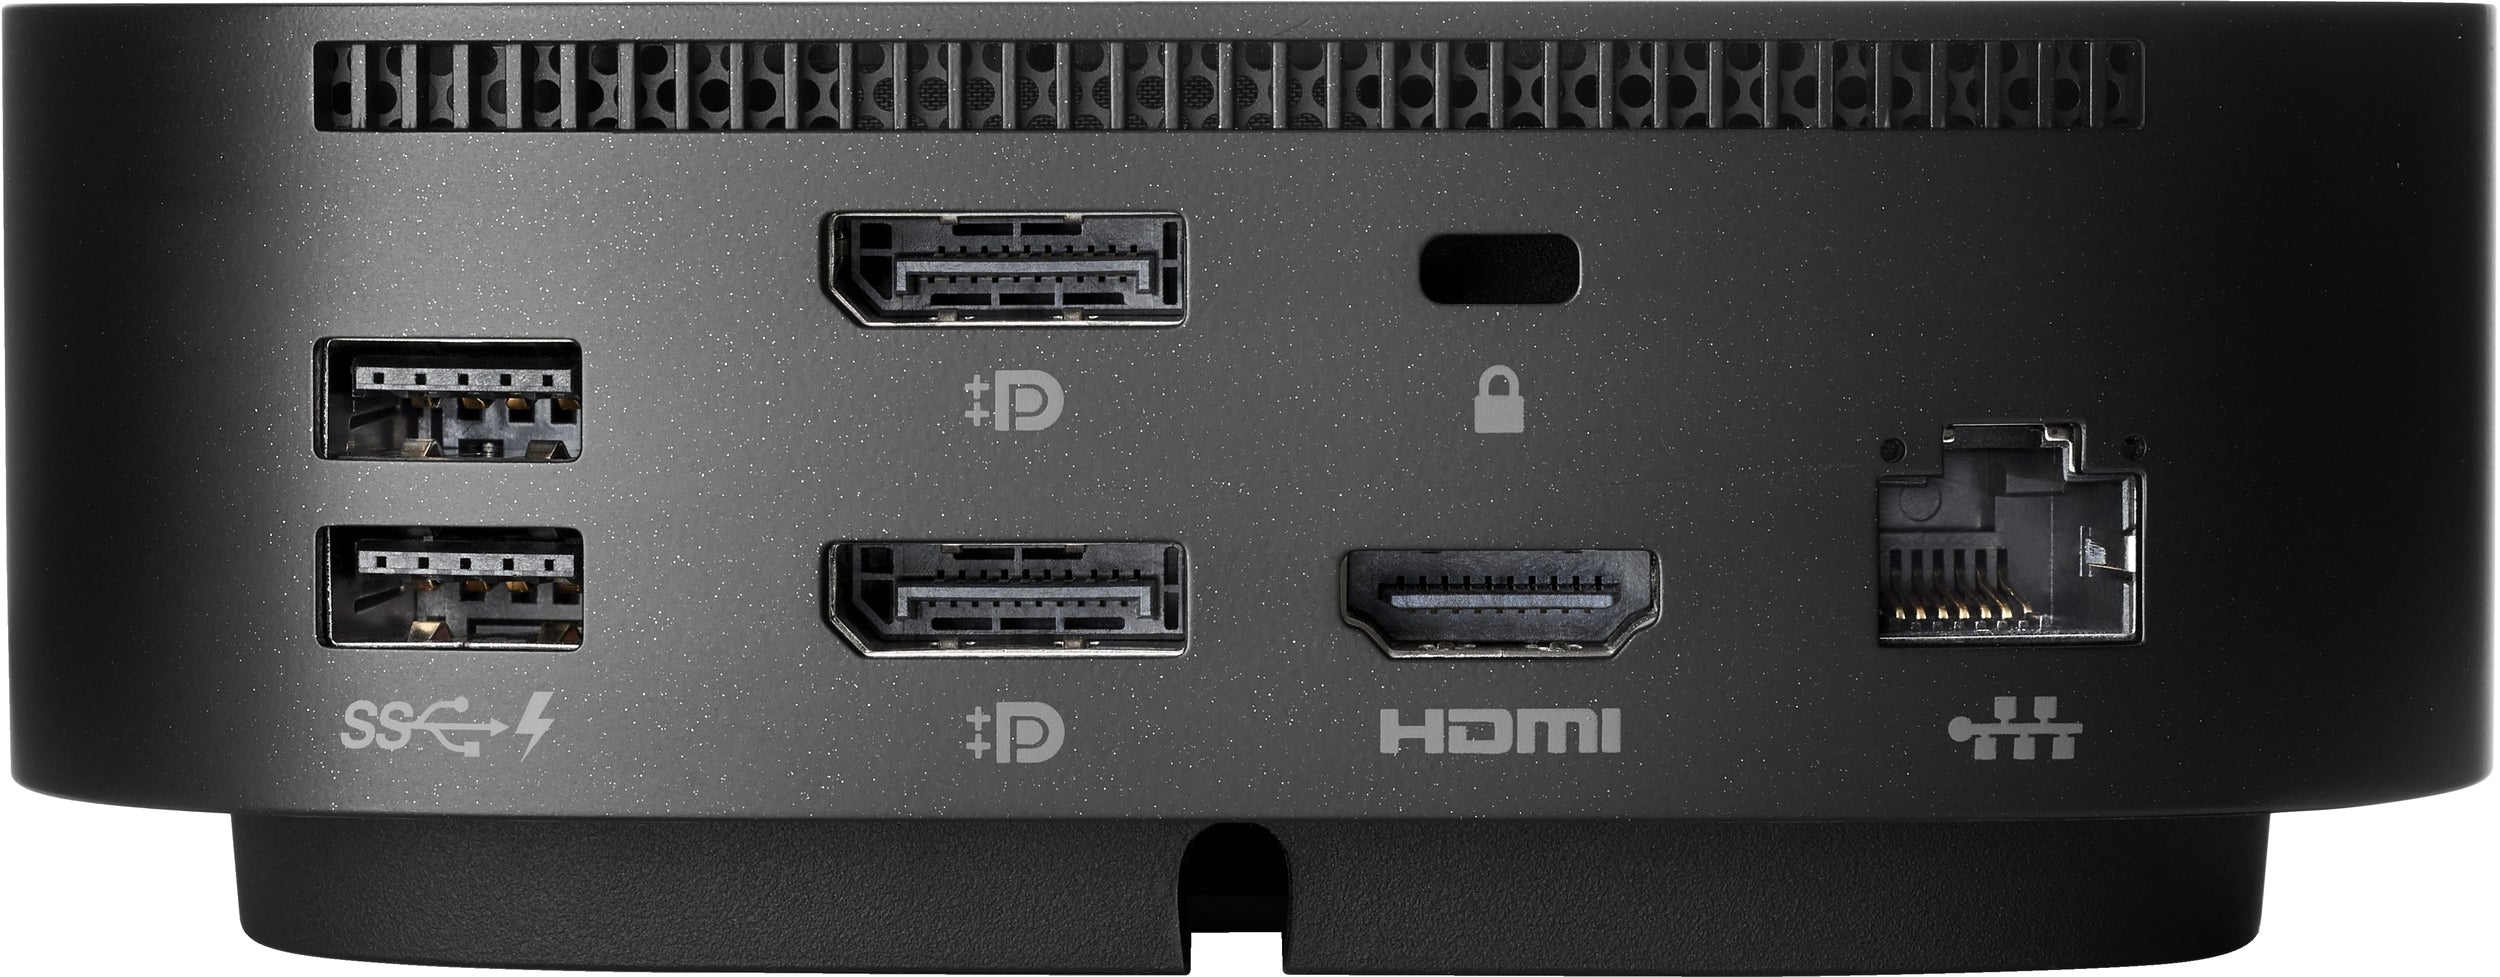 Docking Universal Hp G5 Conexion Usb Tipo C / 2 Display Port/1 Rj45/1 Usb Tipo C/ 4 Usb 3.0/ 1 Hdmi 2.0/1 Clavija De Audio Combo/Carga Notebooks Hasta De 100W Por Usb-C 3.0